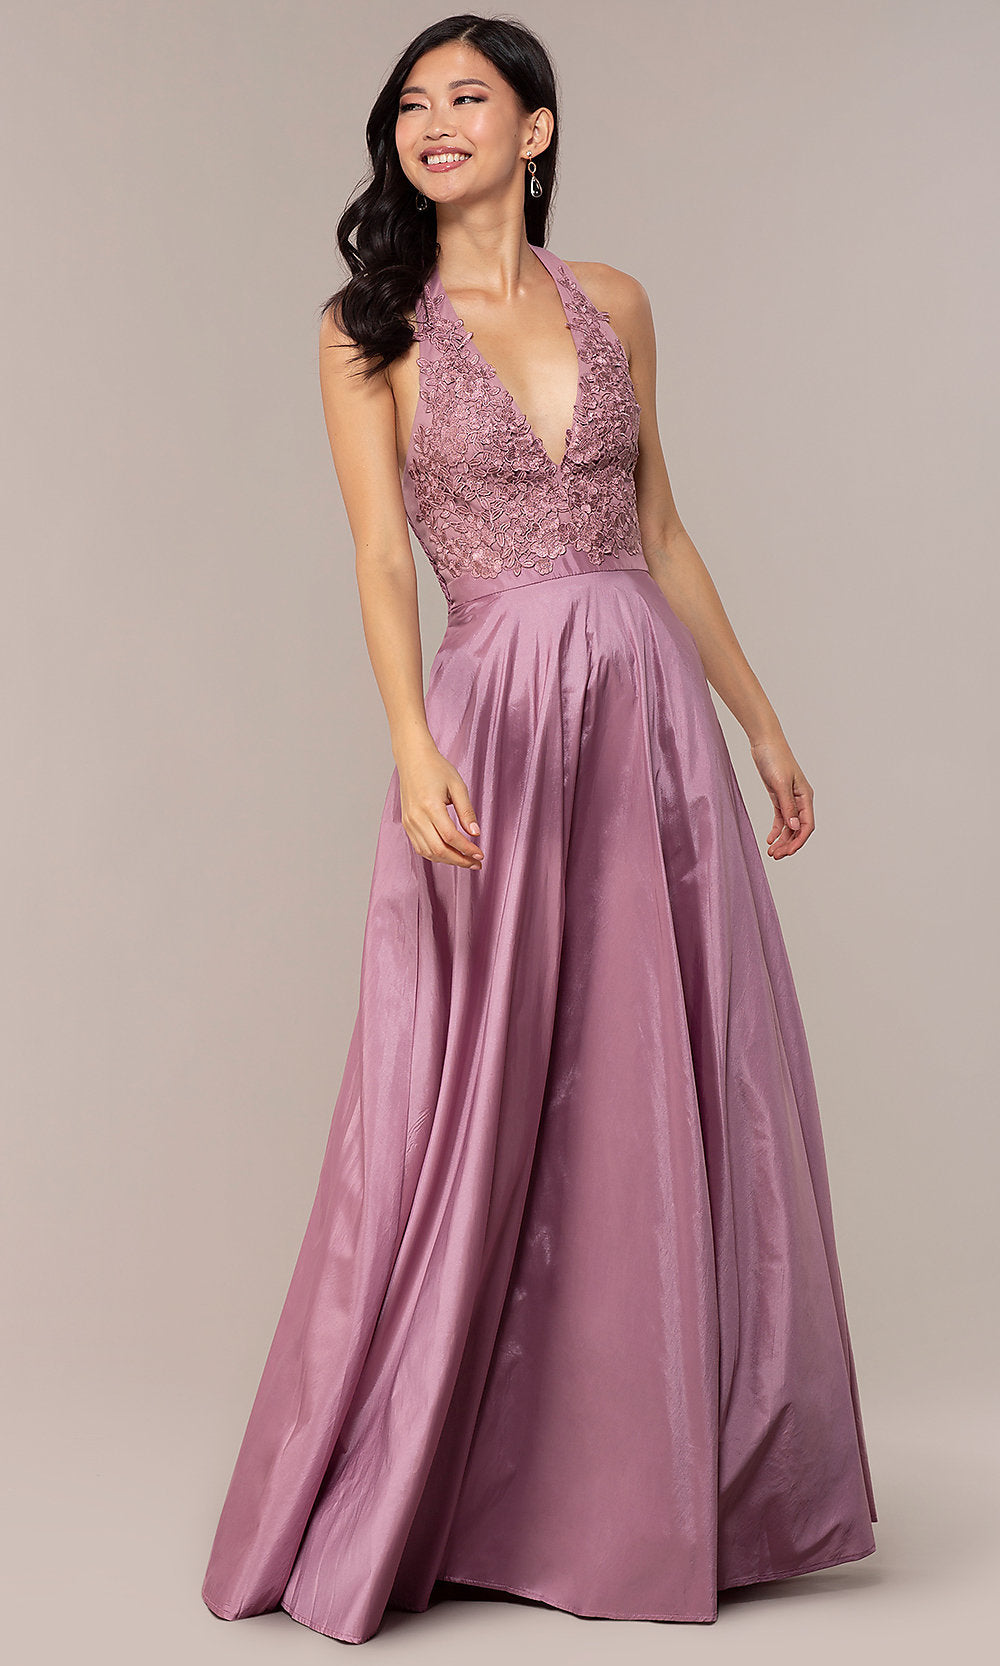 Mauve Lace-Bodice Halter Long Prom Dress with Pockets